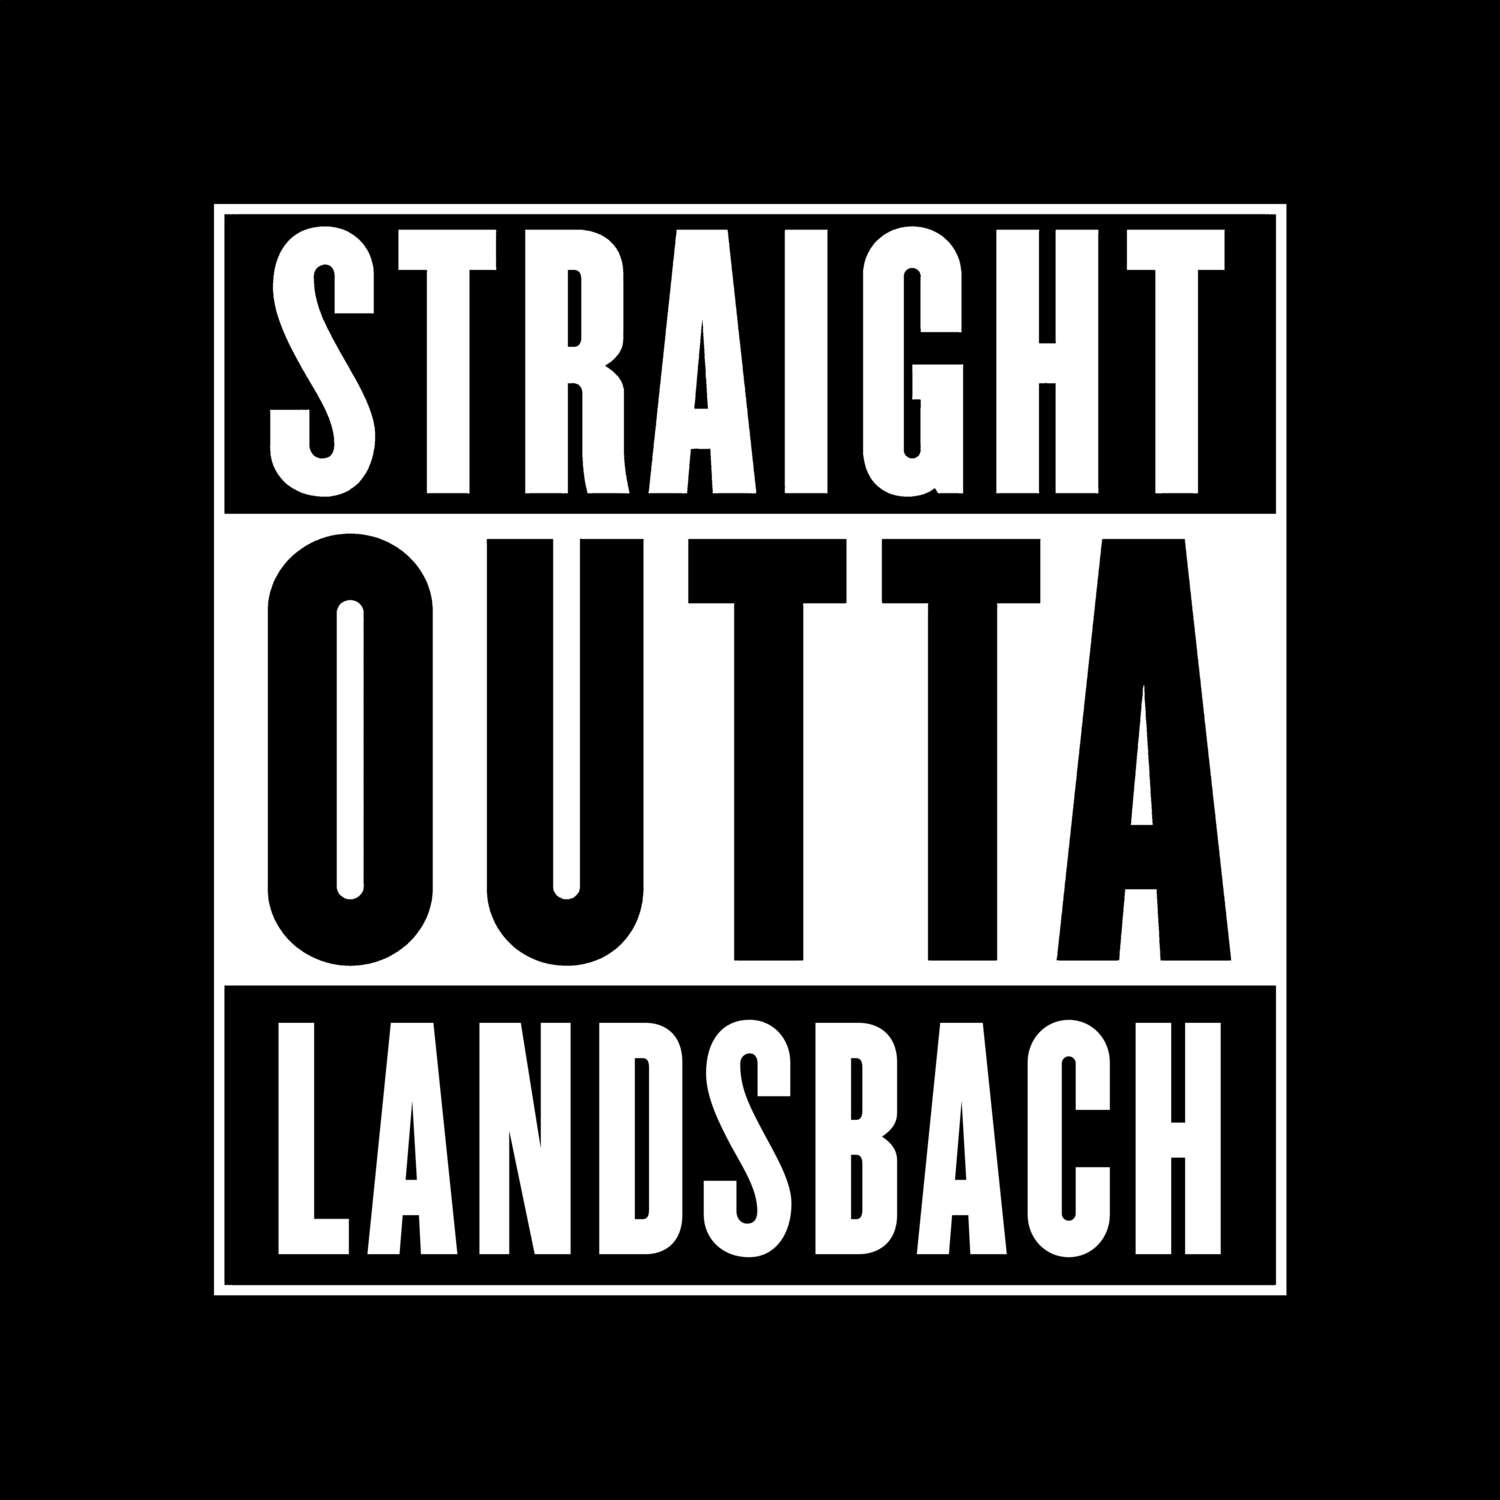 Landsbach T-Shirt »Straight Outta«